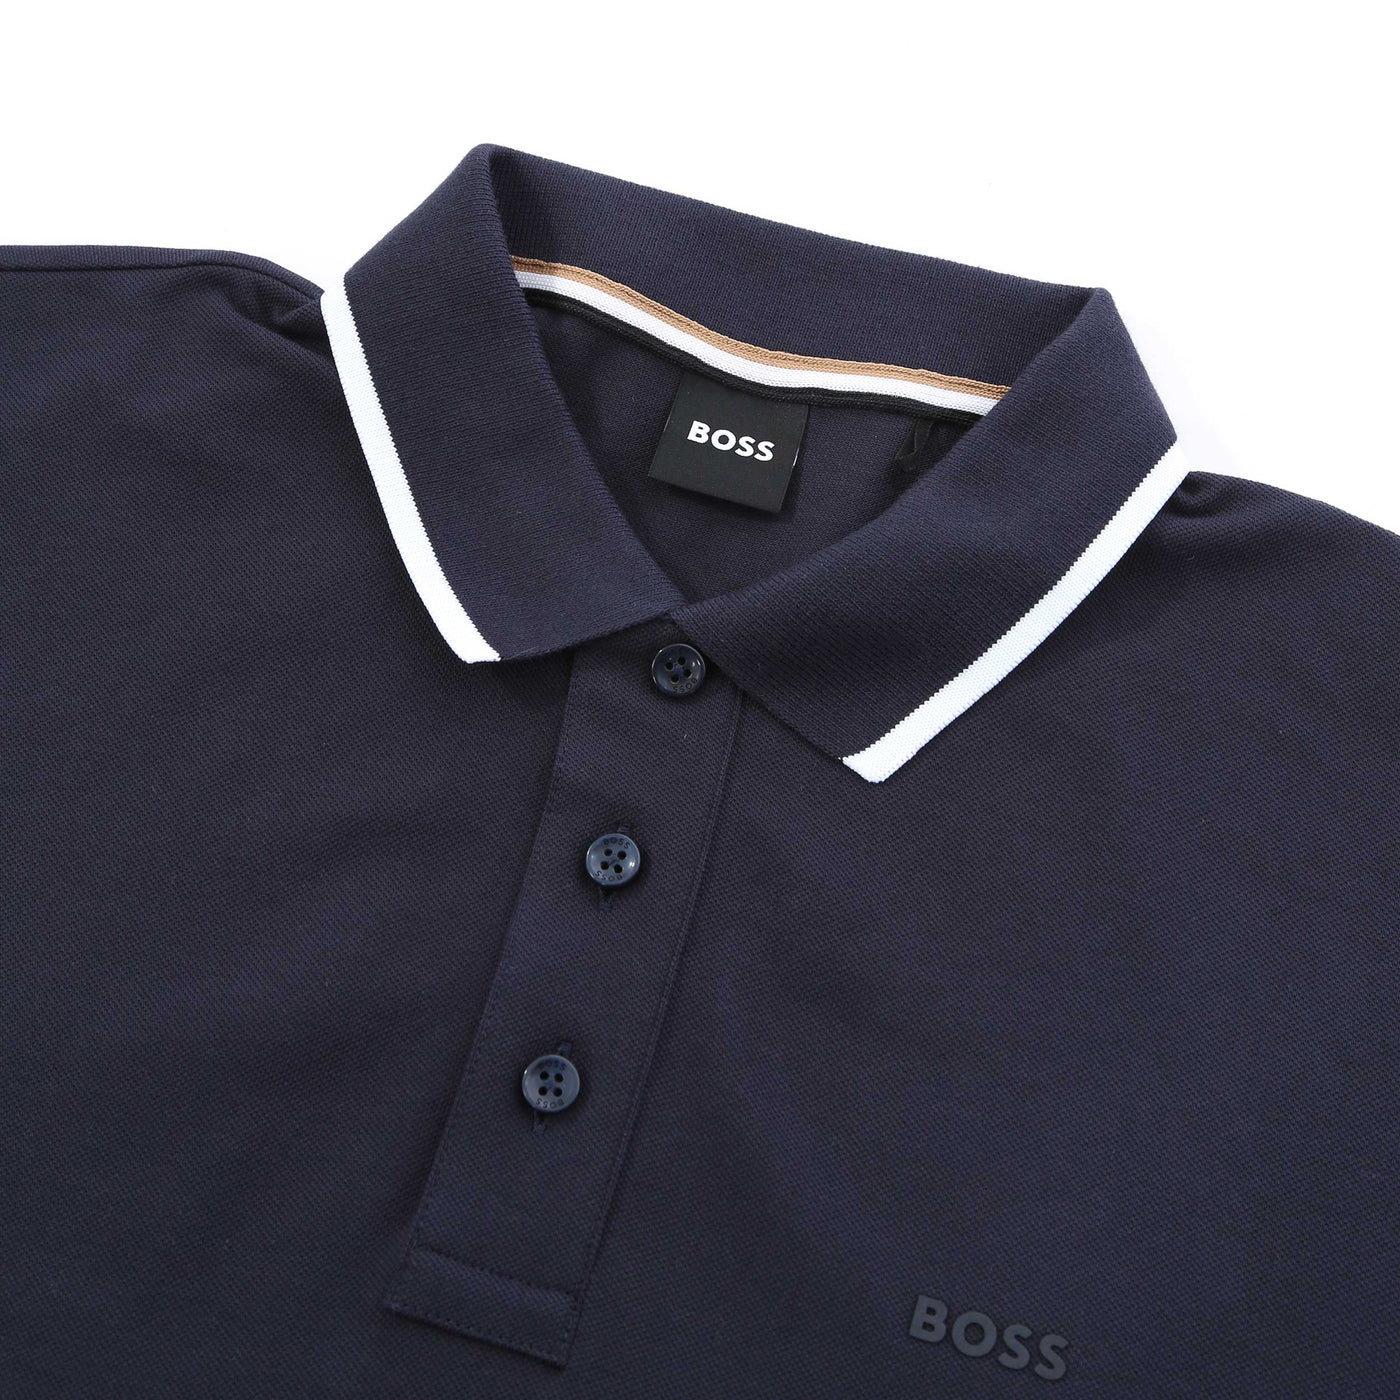 BOSS Parlay 190 Polo Shirt in Dark Blue Neck